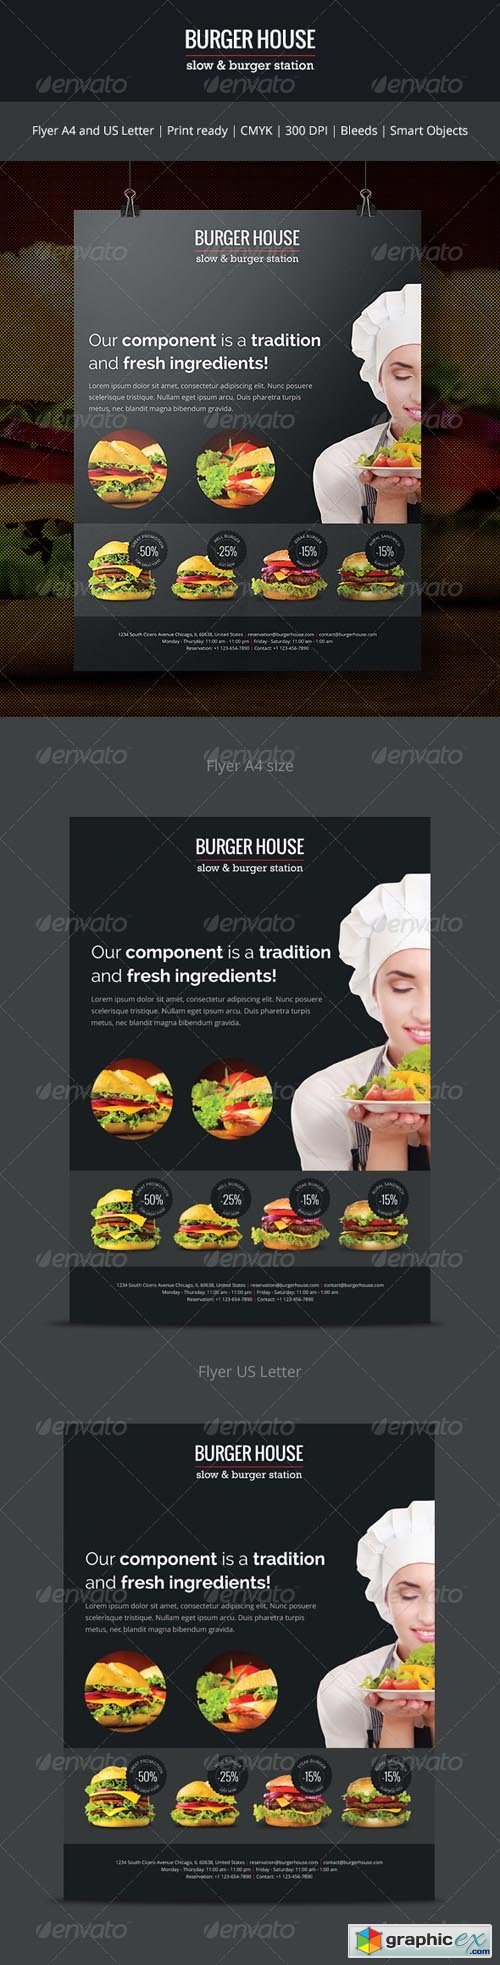 Burger House - Flyer